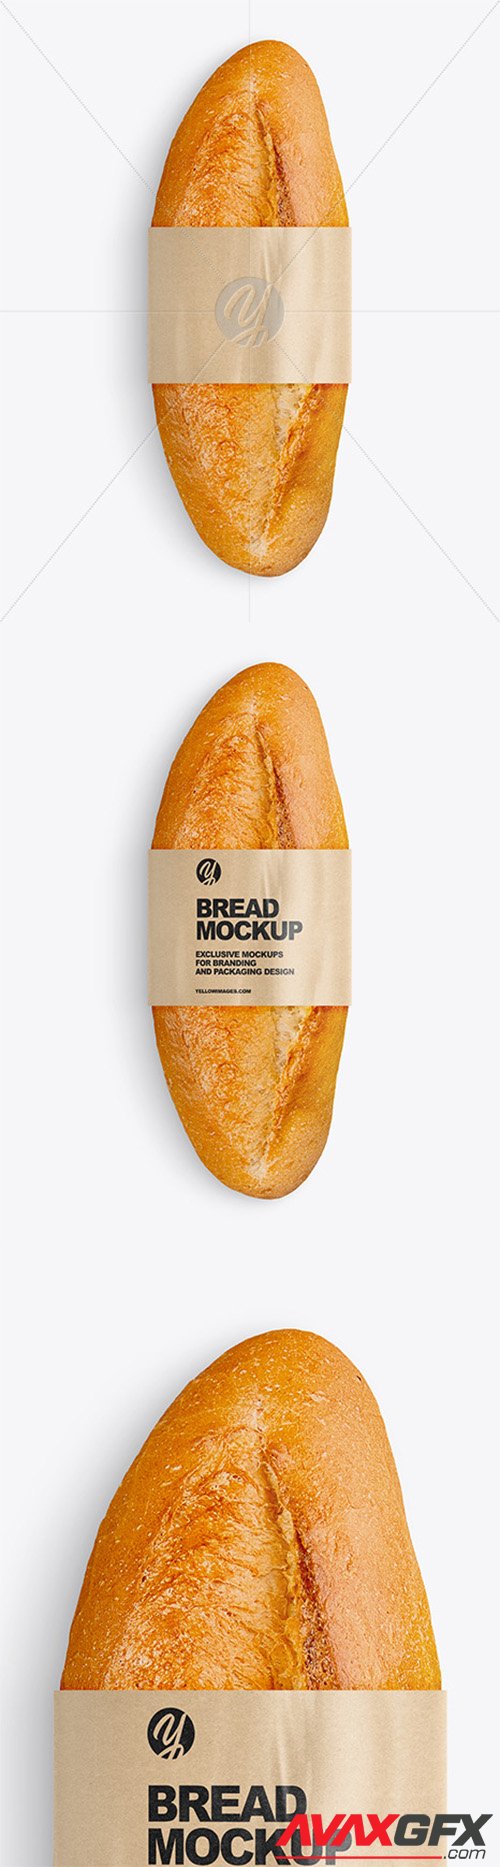 Bread with Label Mockup 76797 TIF